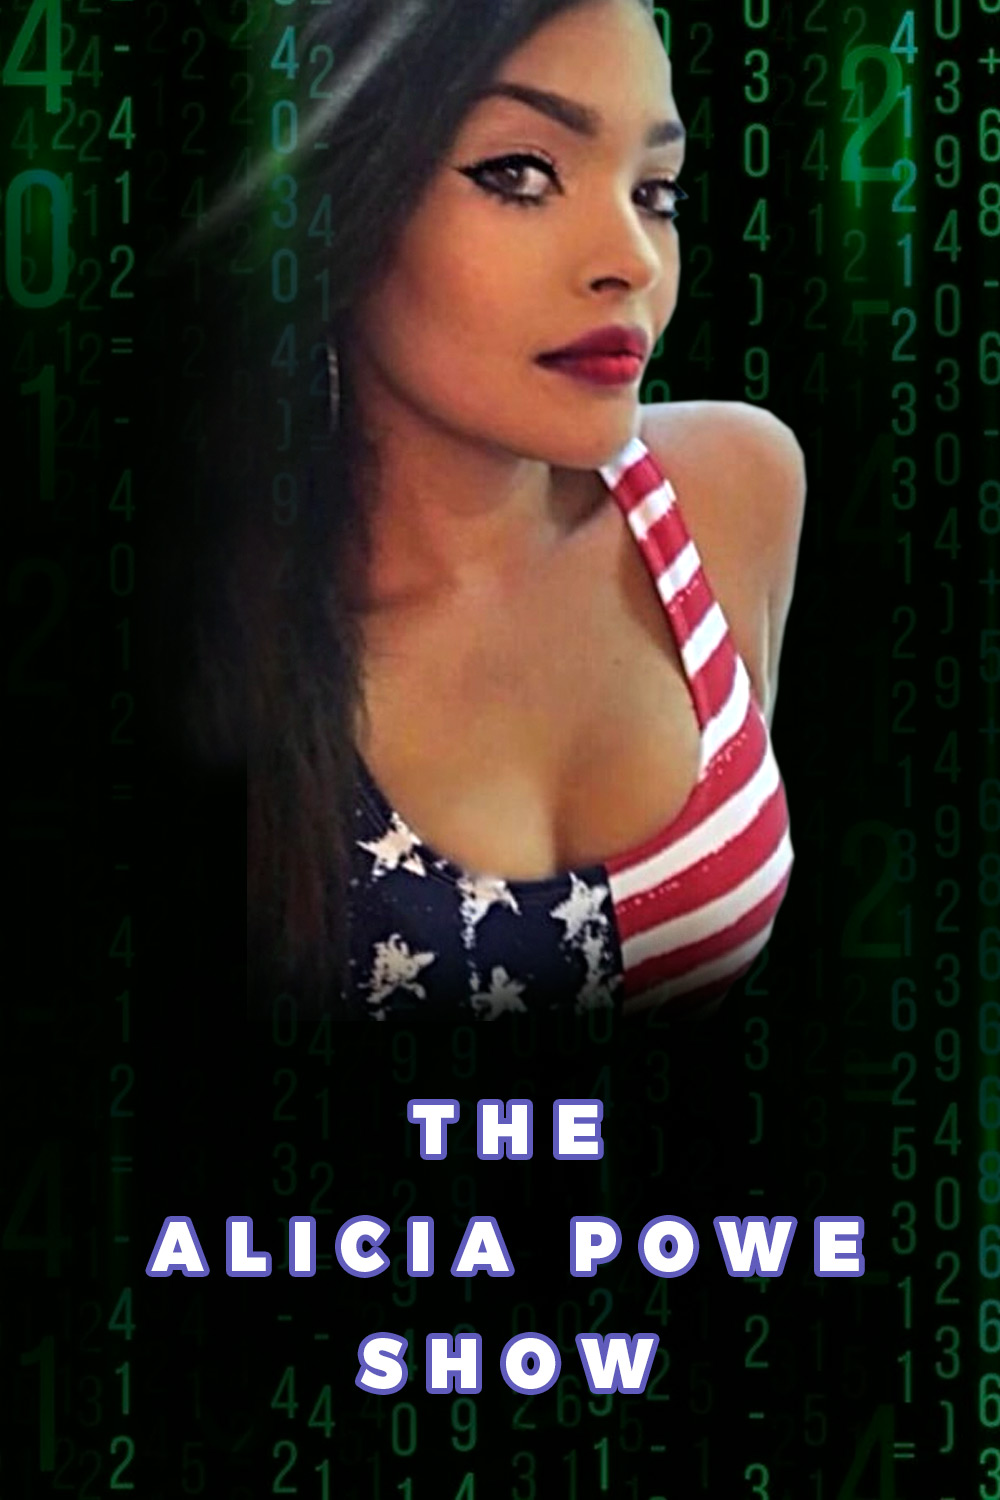 The Alicia Powe Show